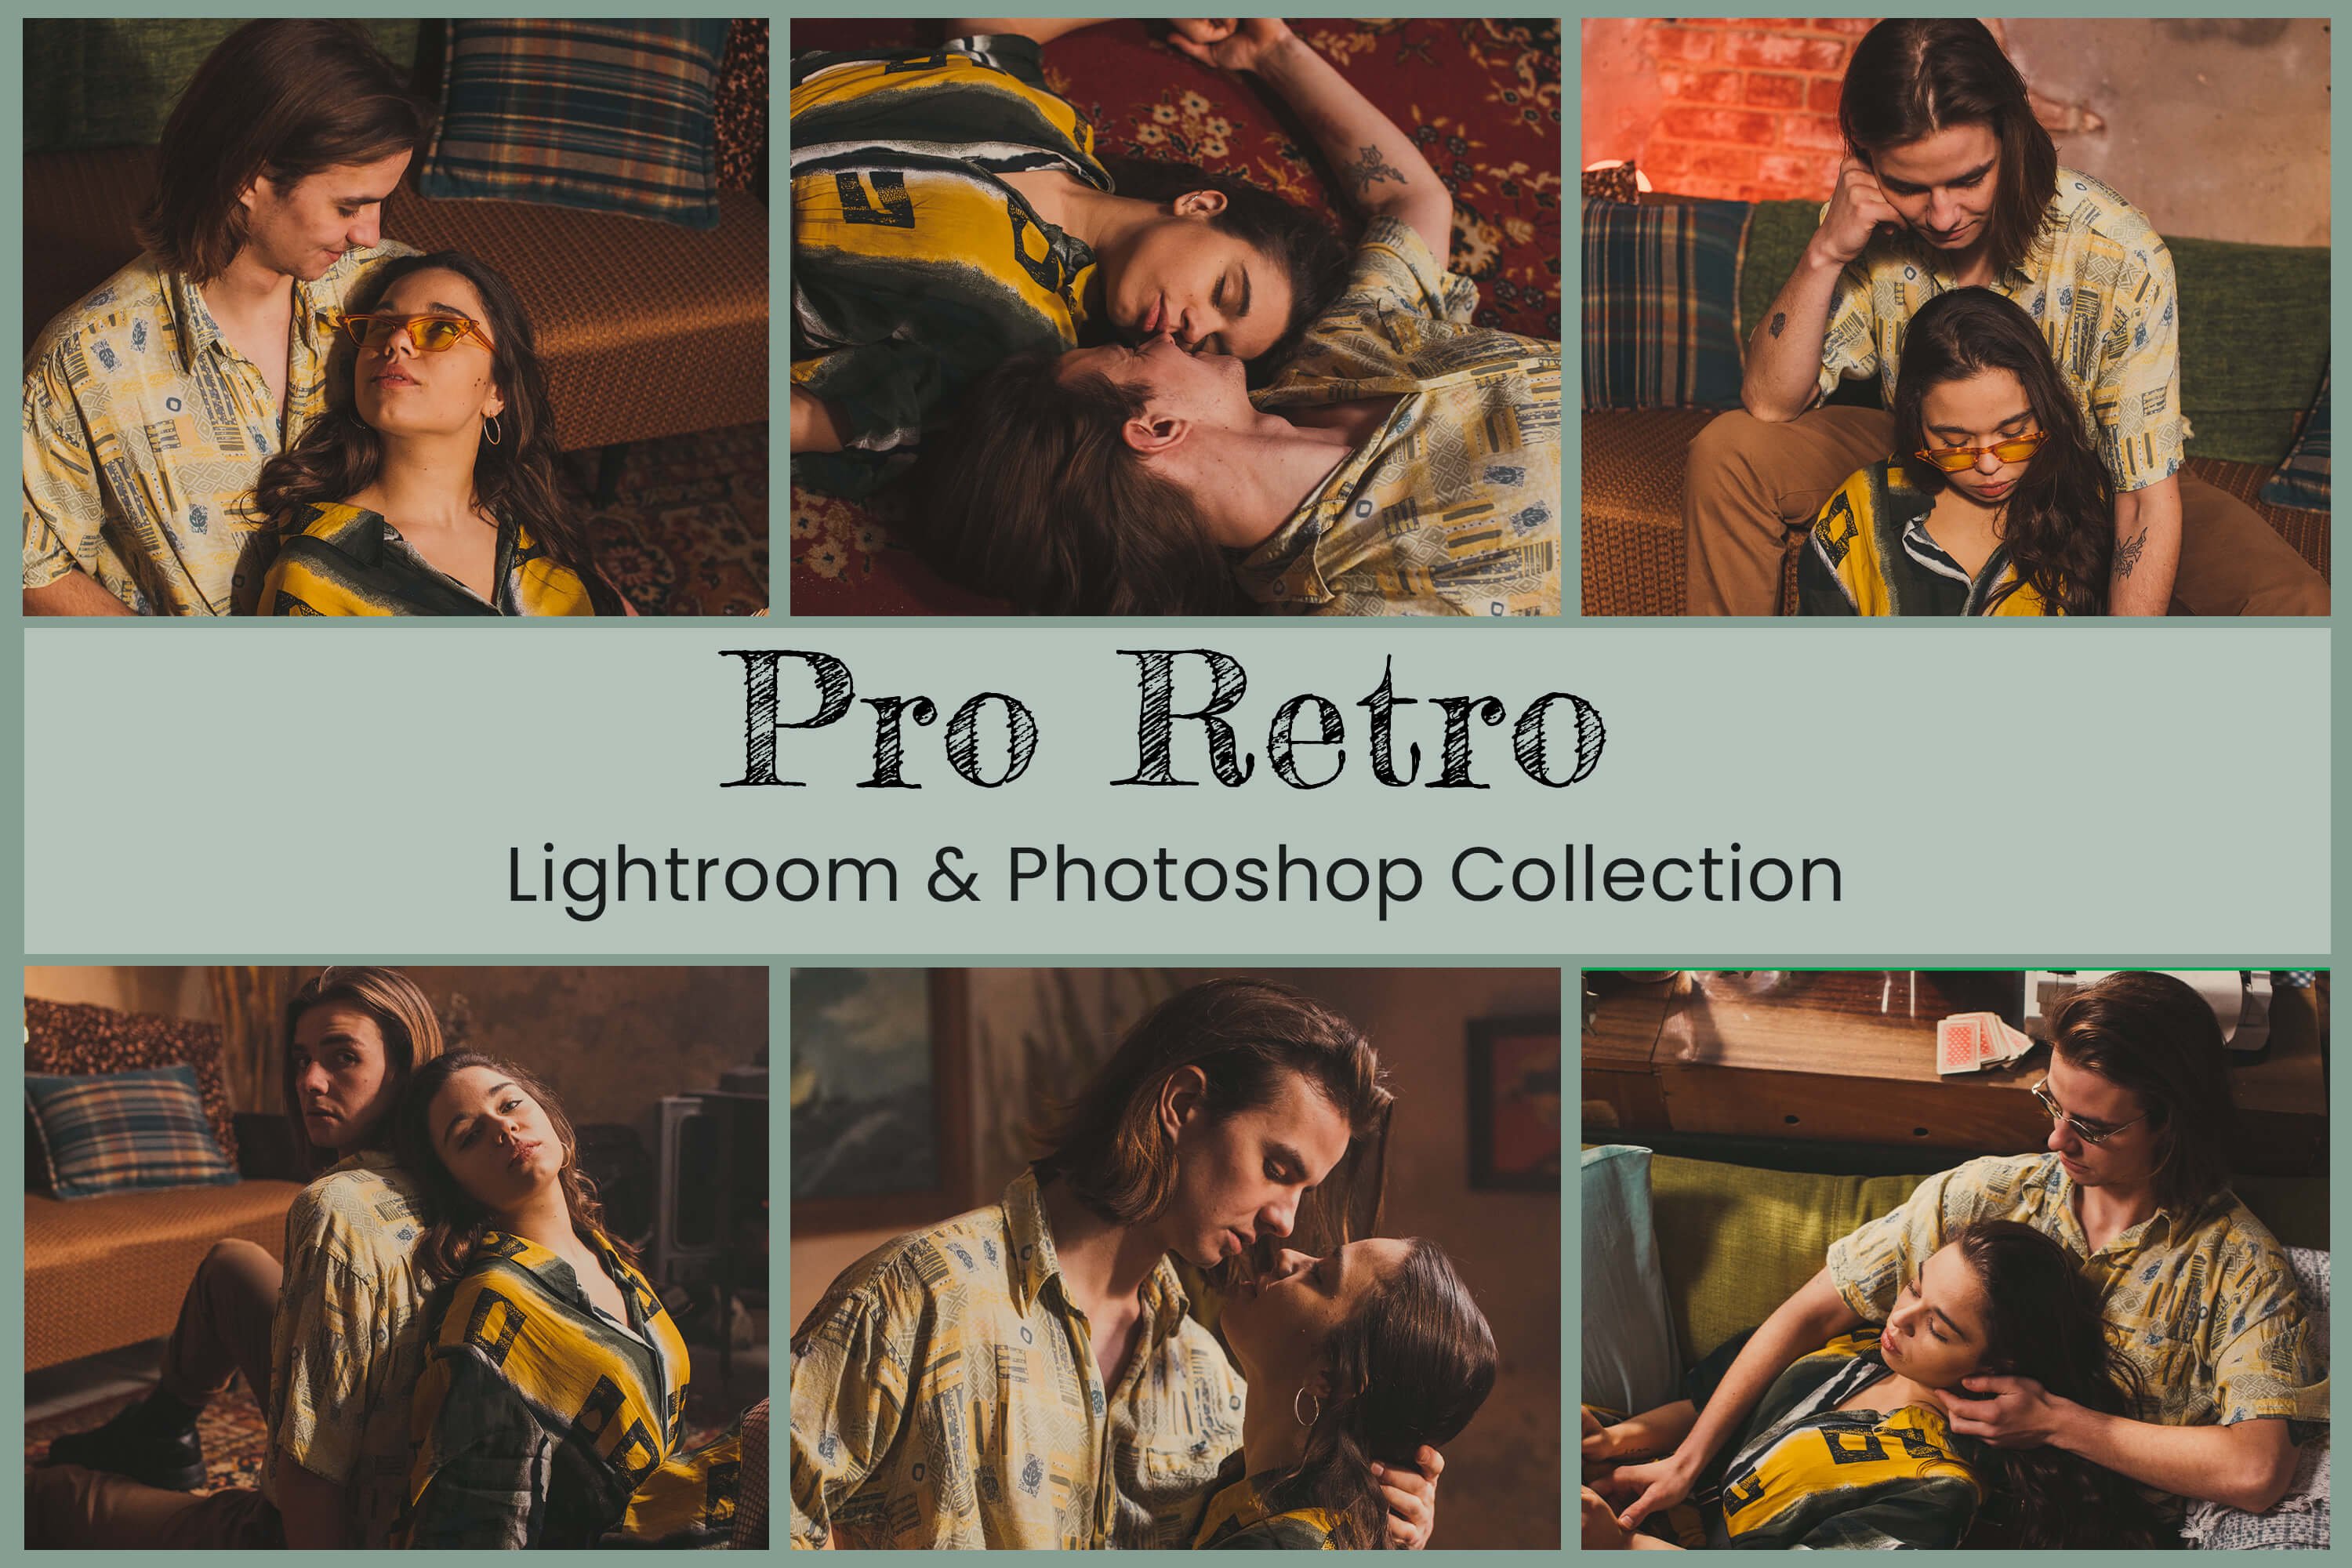 Retro Lightroom Presets Photoshopcover image.